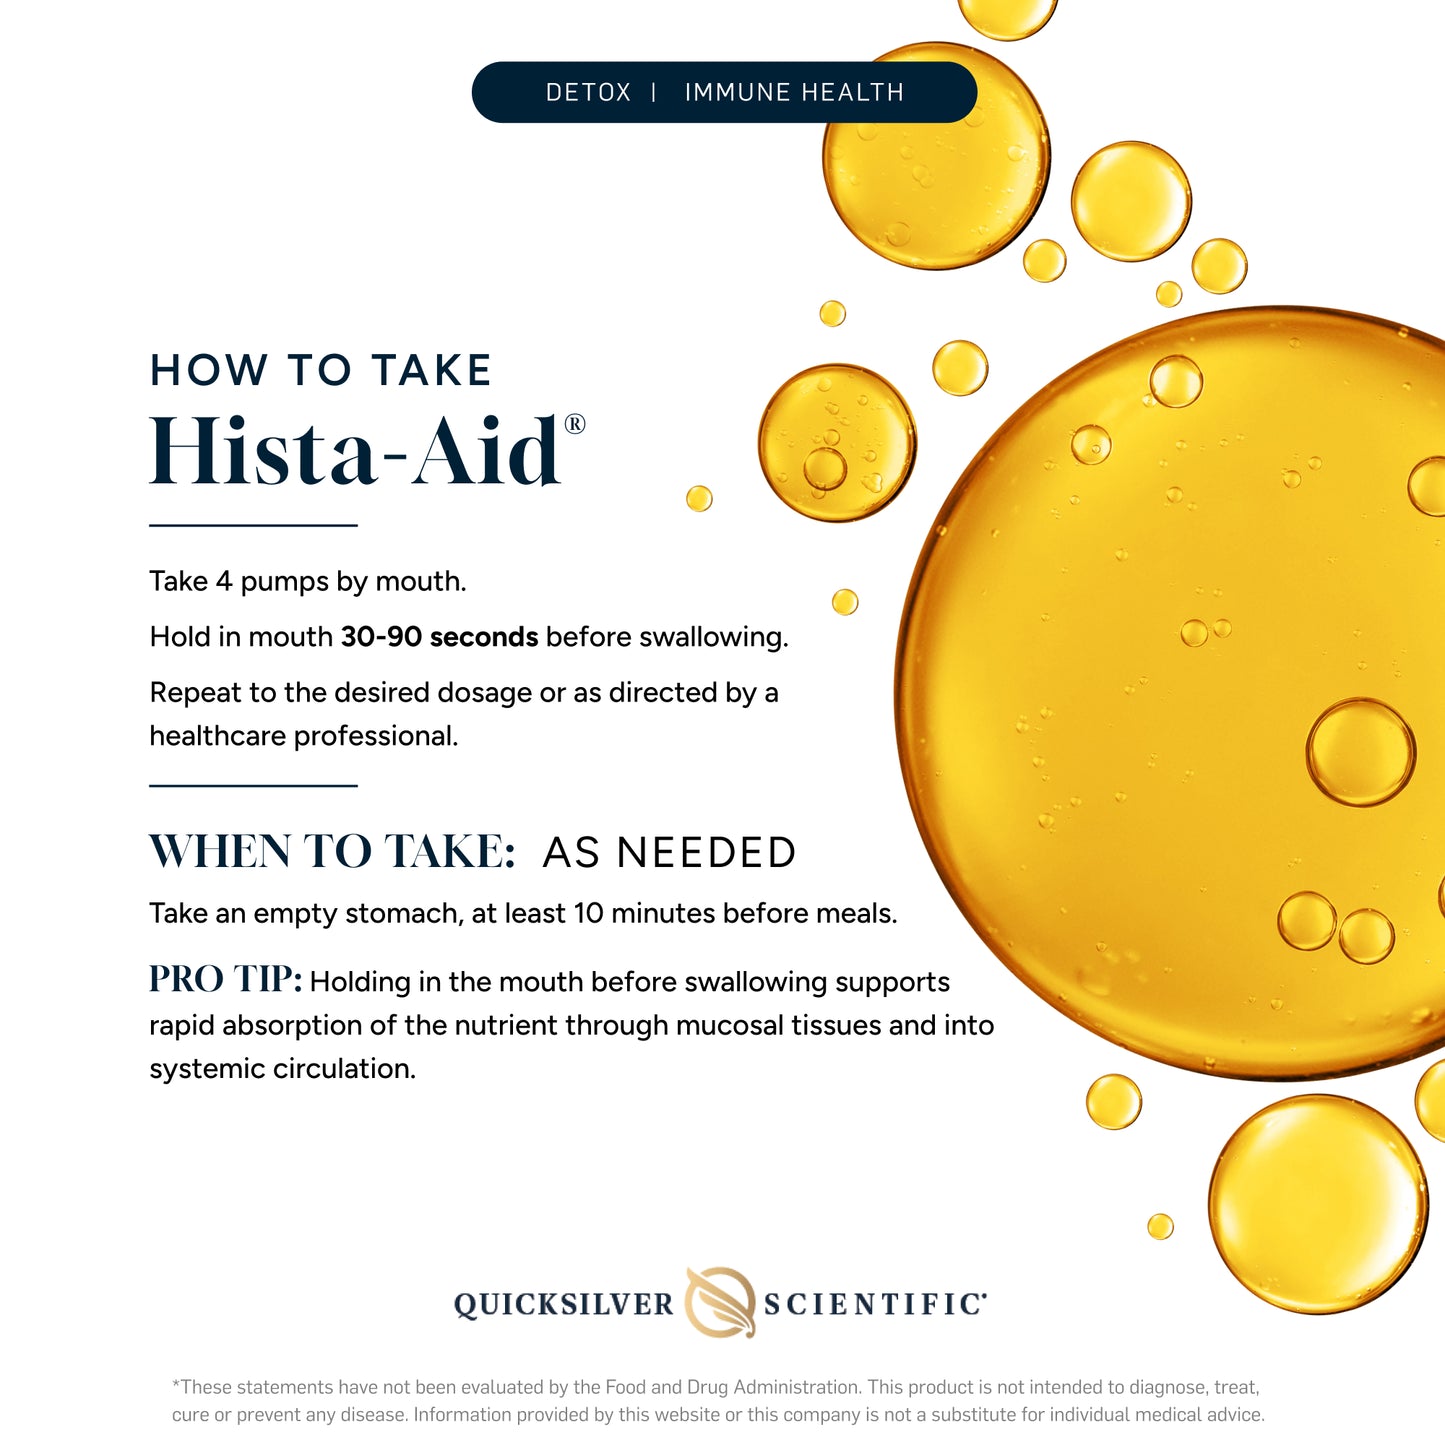 Hista-Aid®